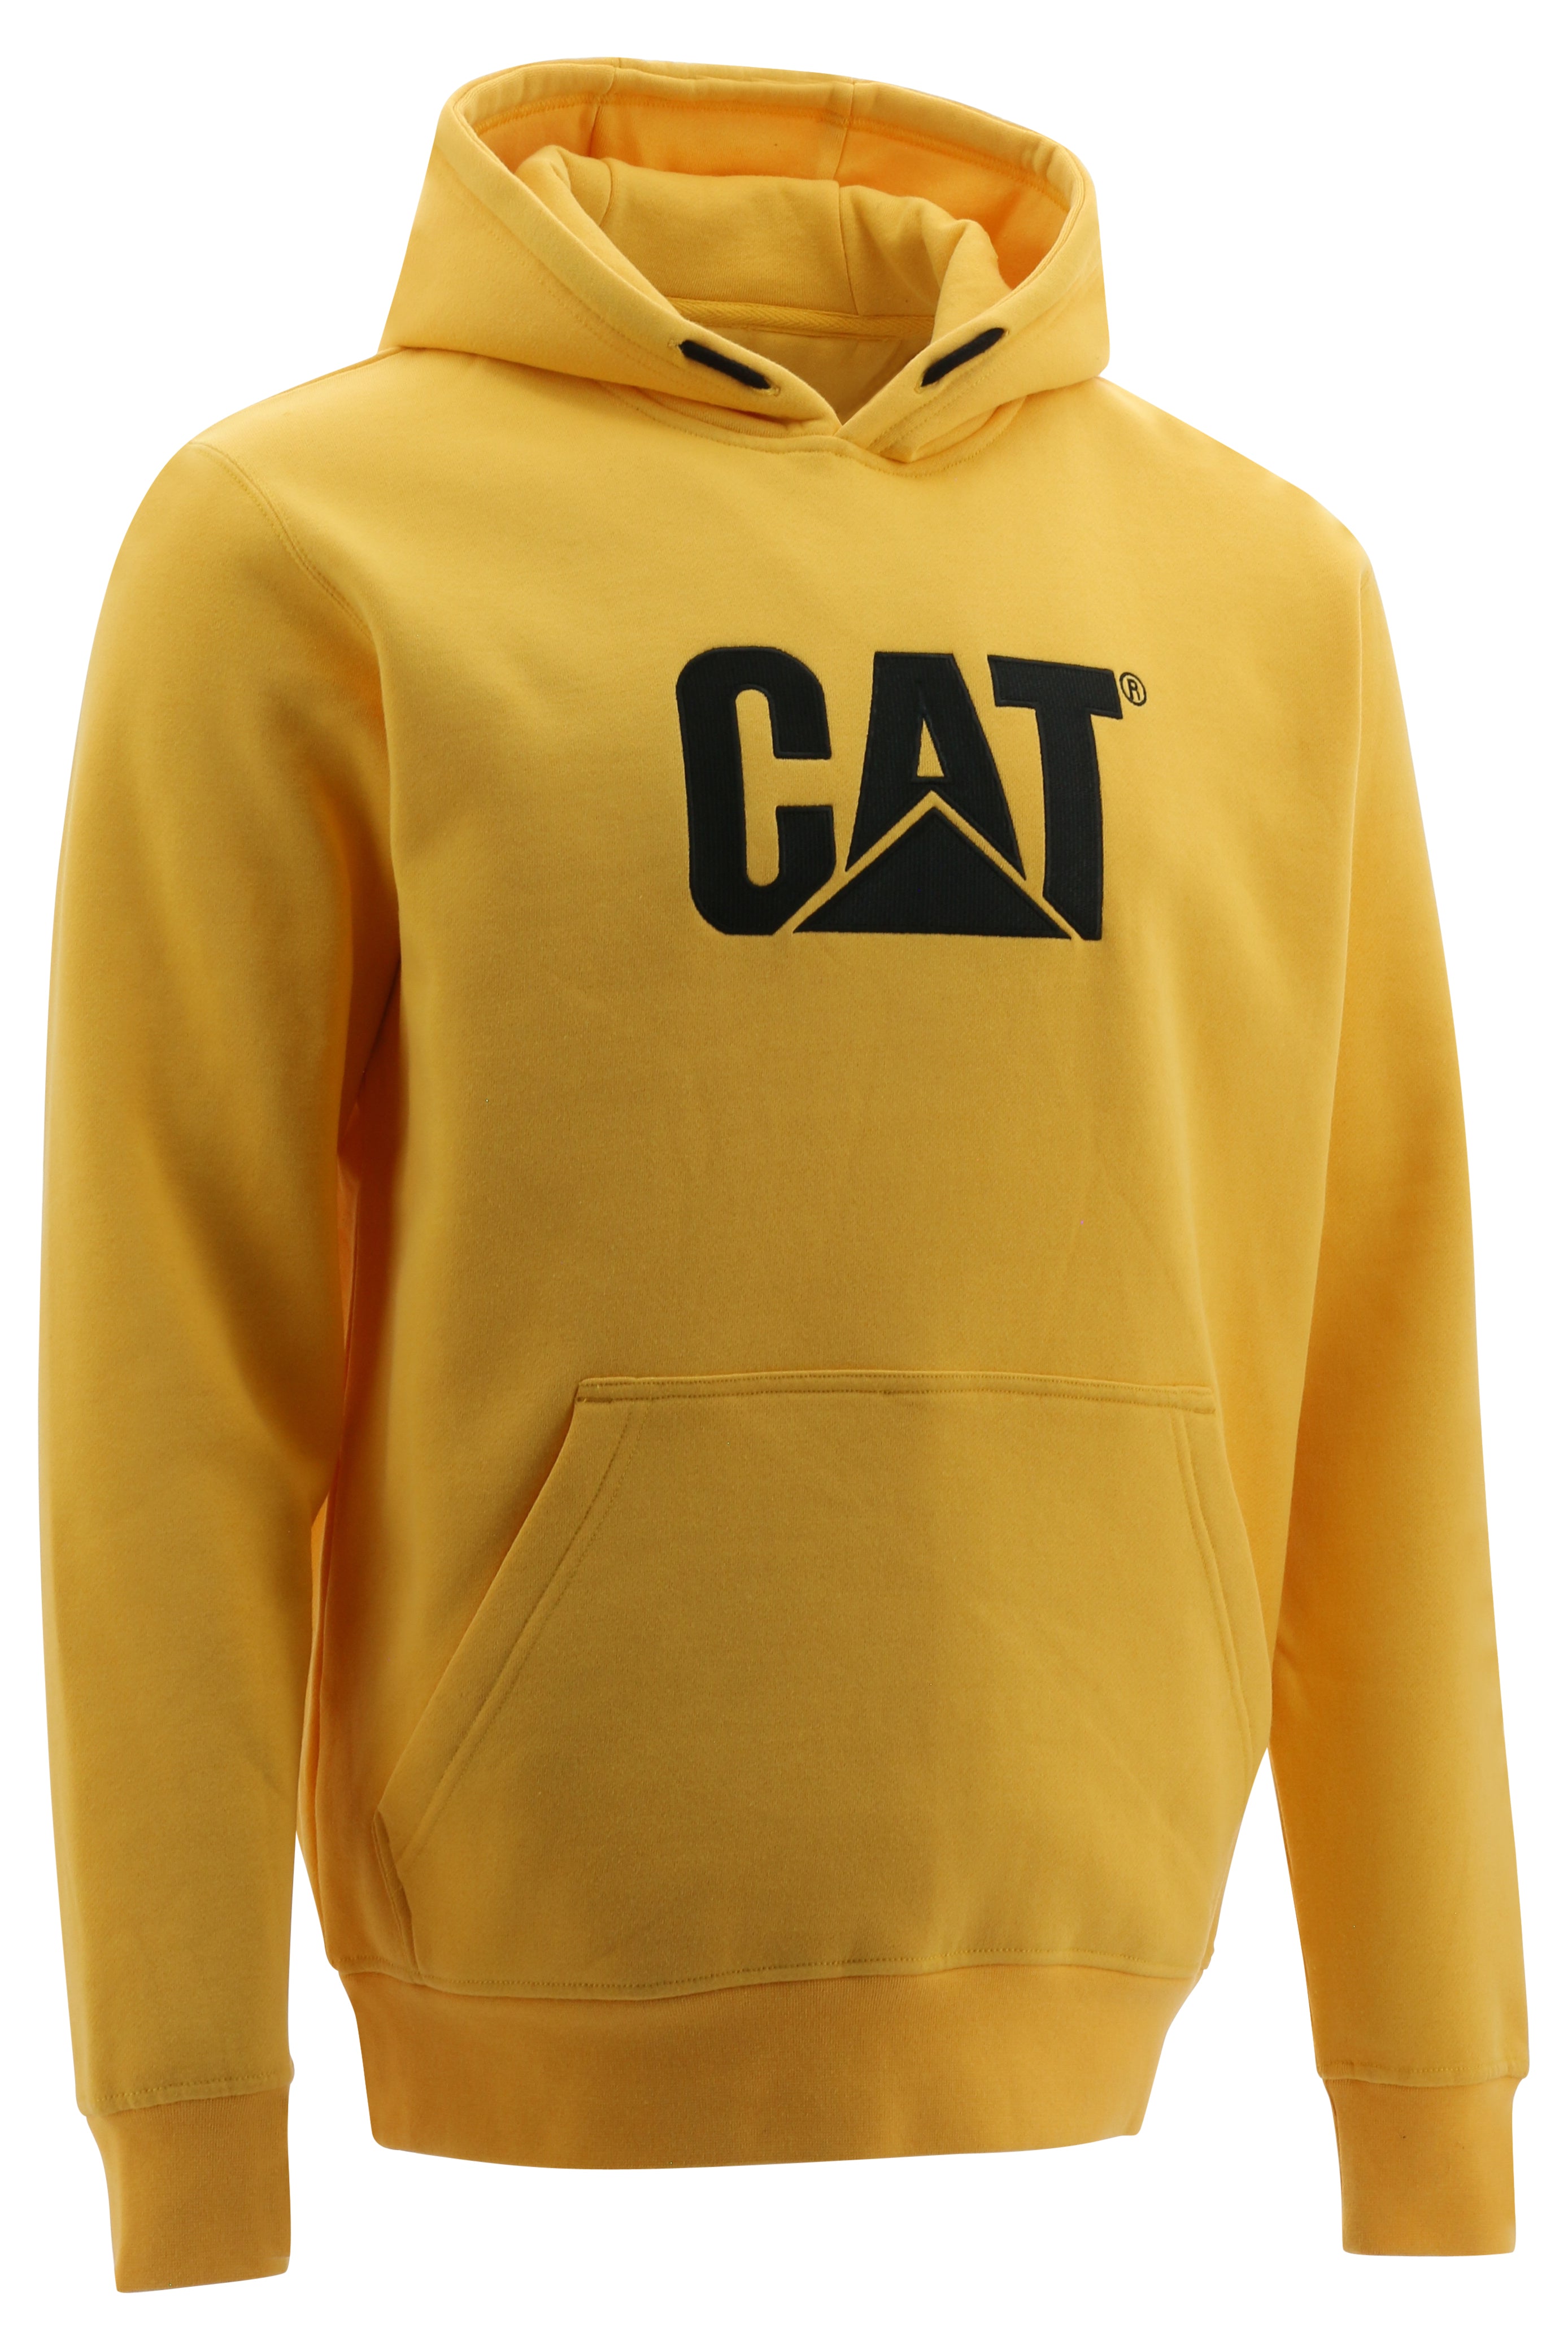 'Caterpillar' Men's Trademark Hooded Sweatshirt - Yellow / Black